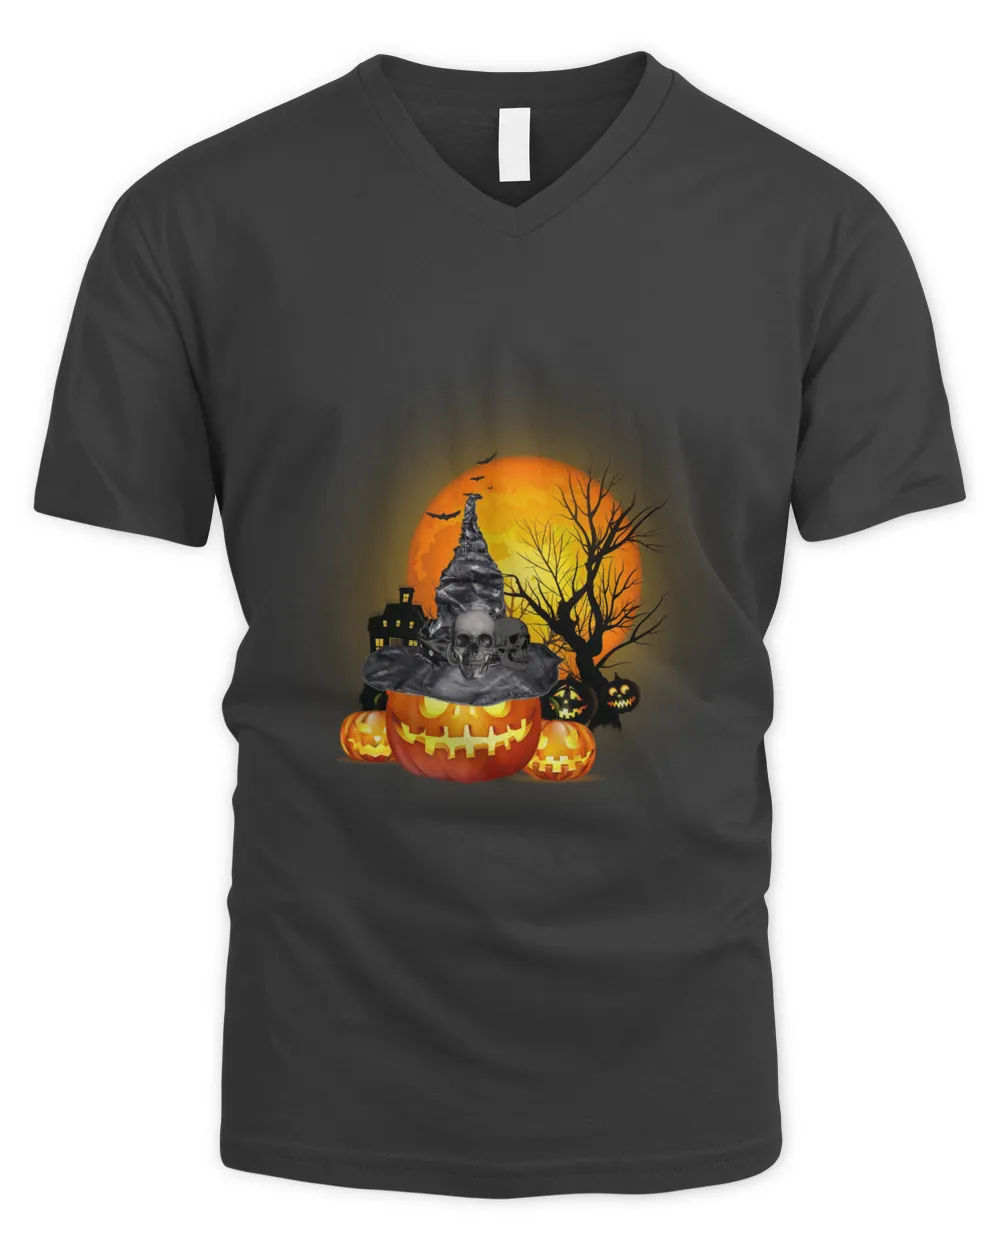 Happy Halloween Long Sleeved T-Shirt, skull skull pumpkin black bats blood moon